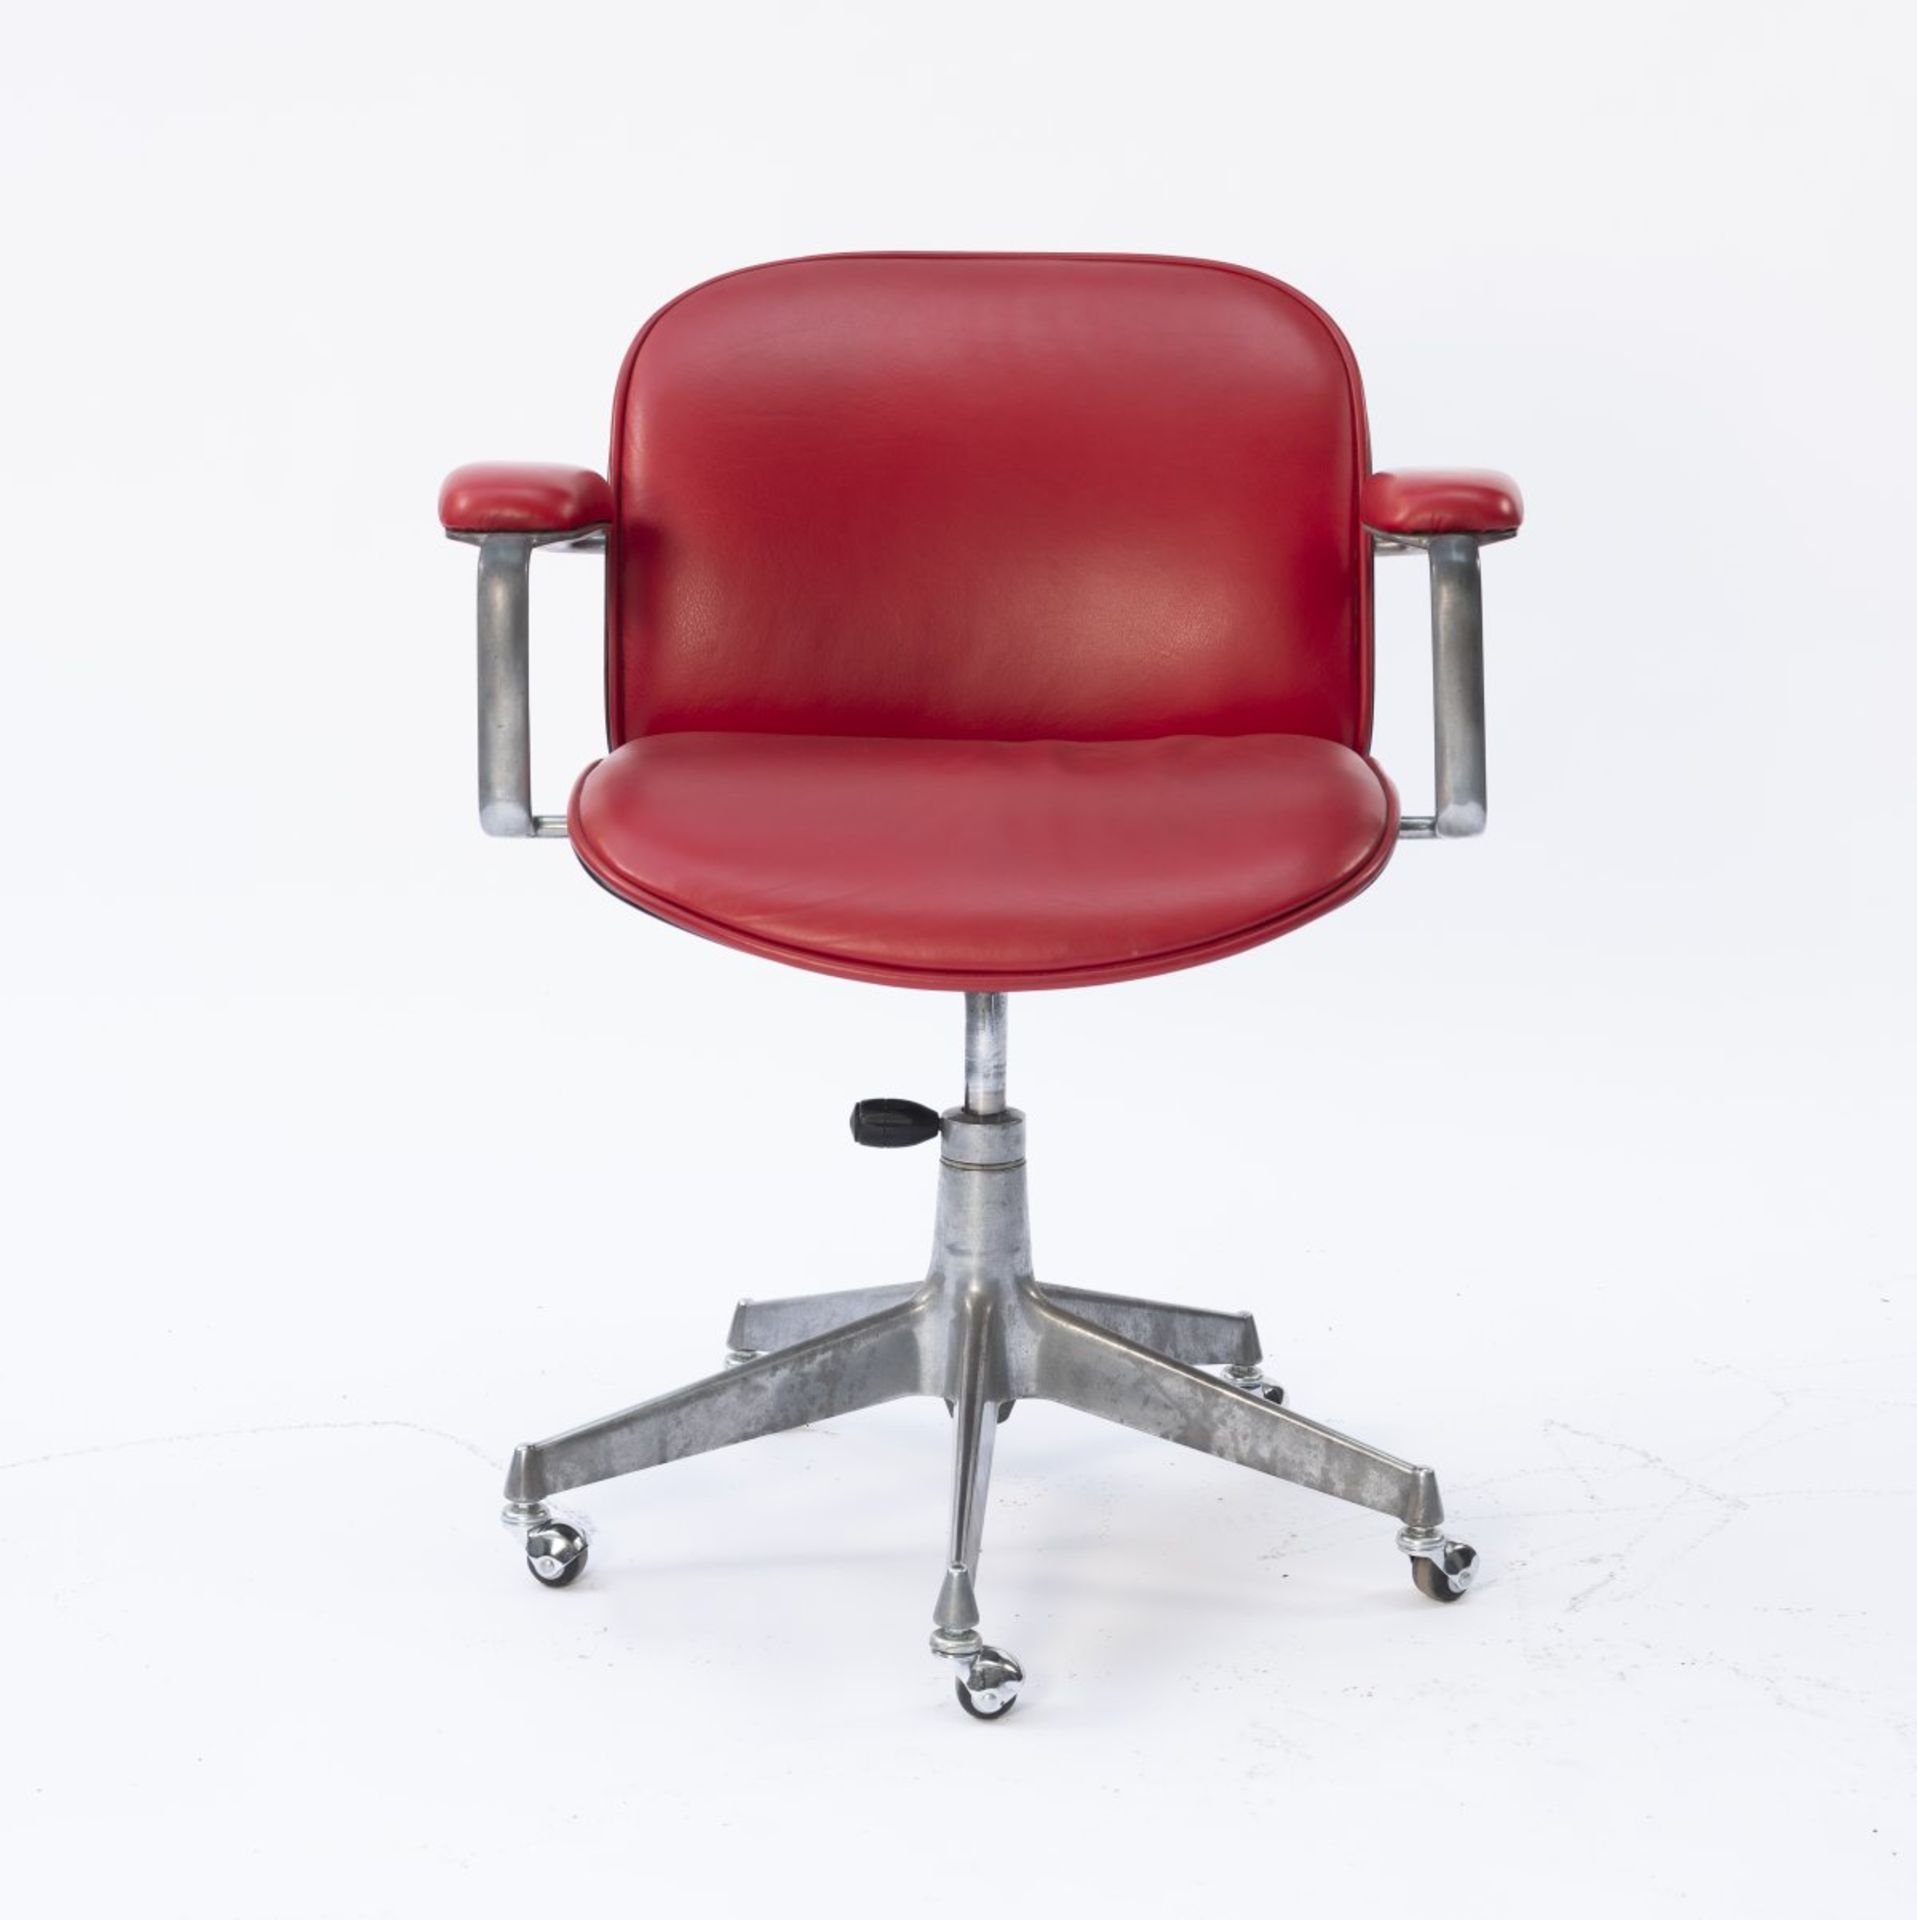 Ico Parisi (attributed), Desk chair, 1959/60